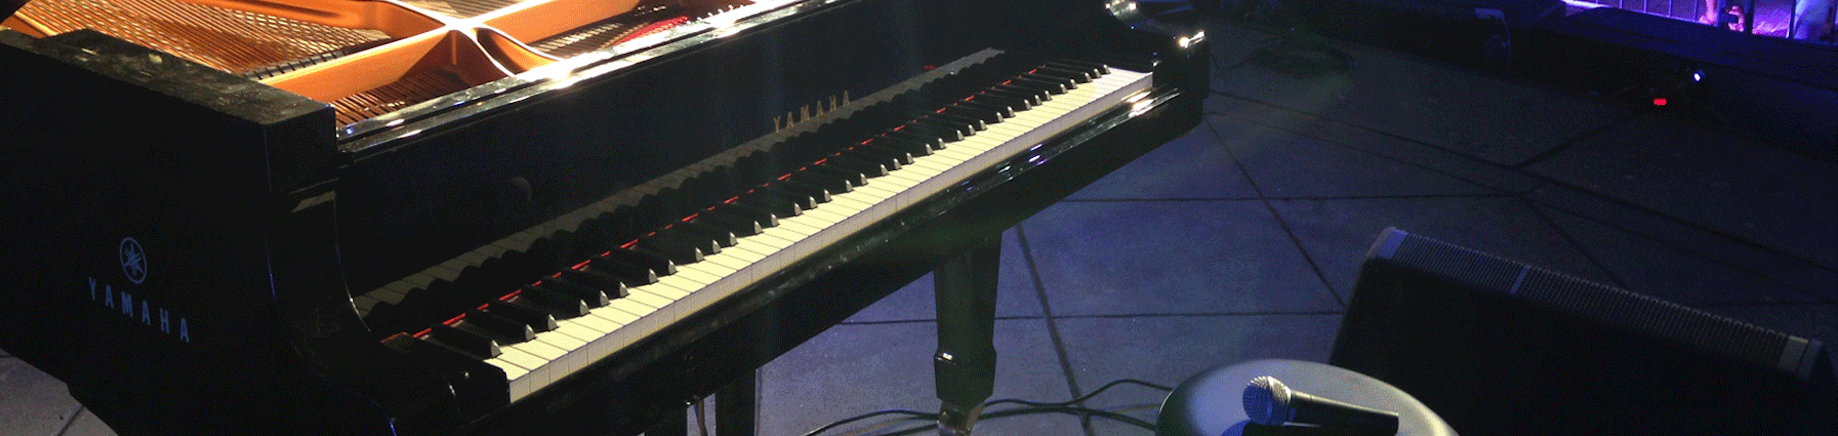 Yamaha Piano on a stage